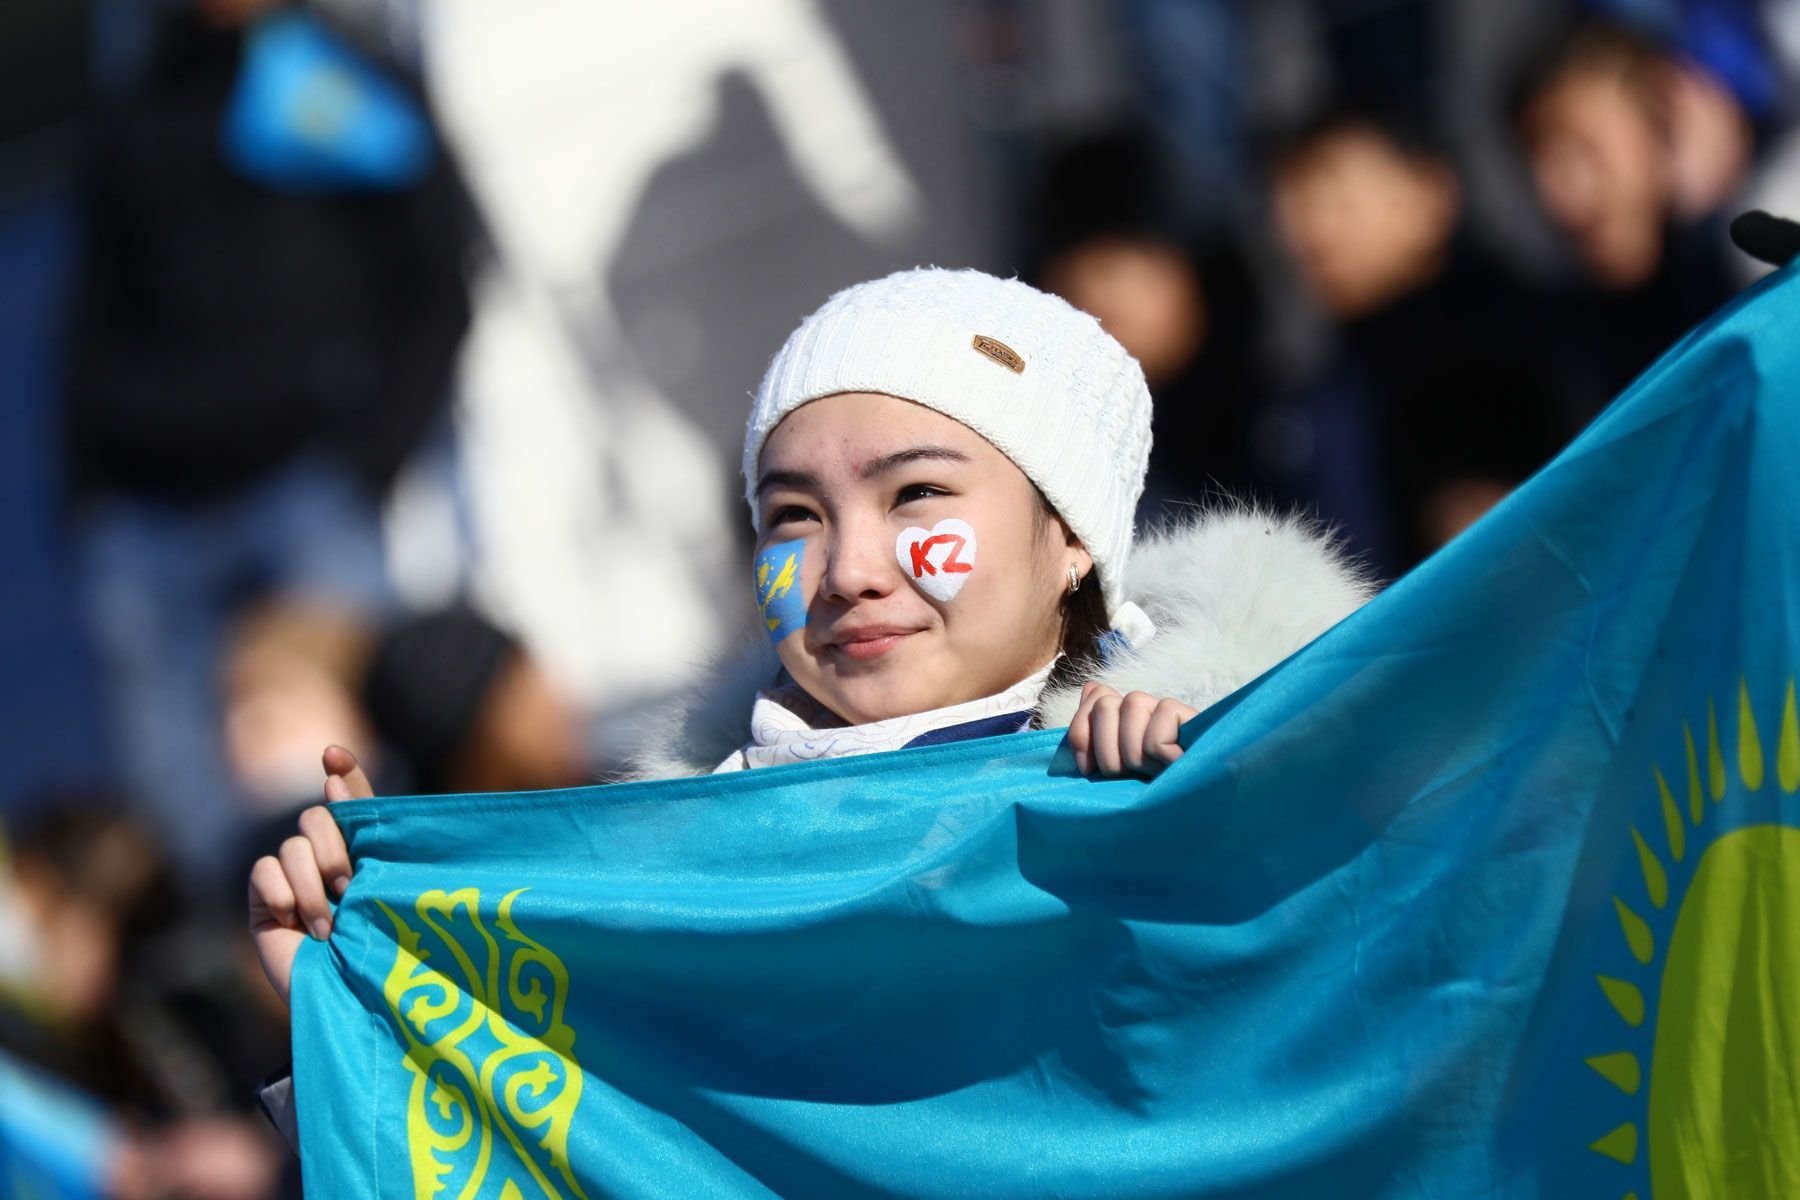 Kazakh people. Казахстан люди. Казахстан казахи. Казахстан патриотизм. Люди с флагом Казахстана.